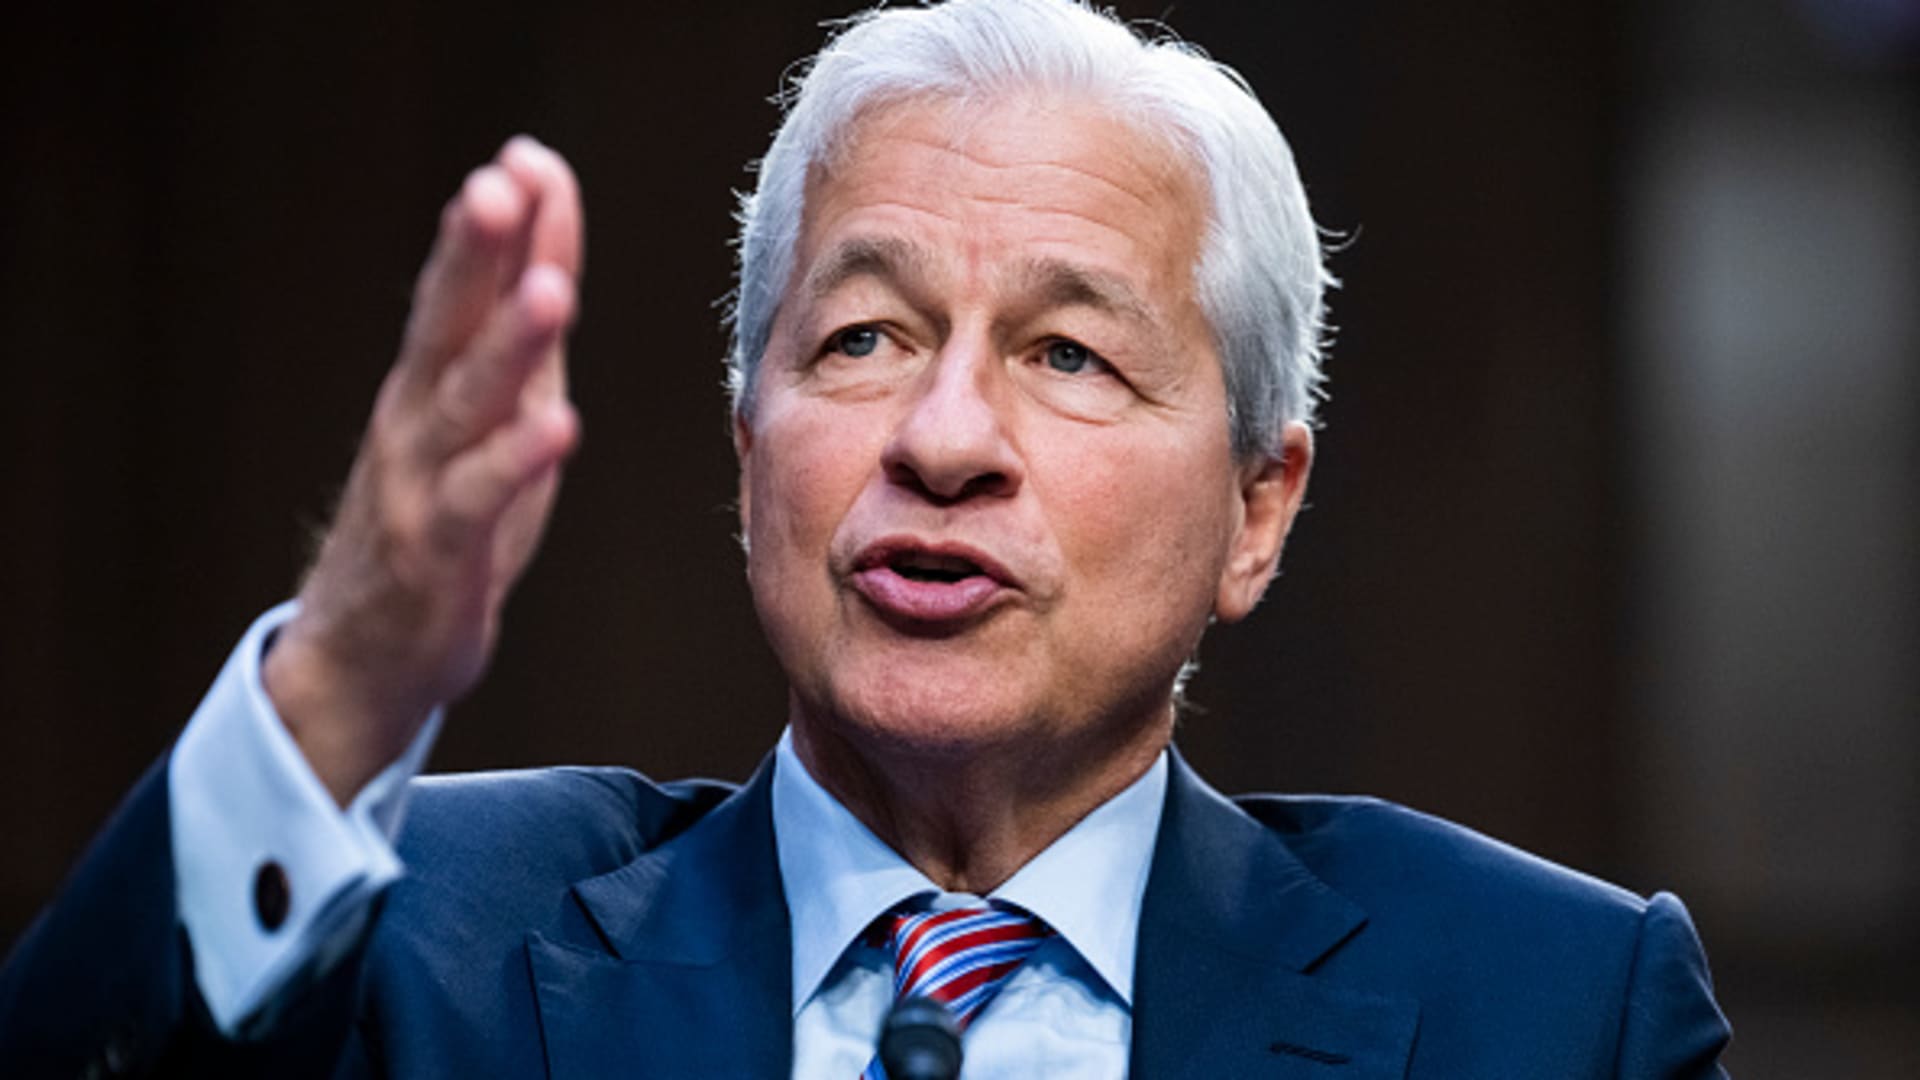 JPM’s Jamie Dimon warns of market panic as U.S. nears default